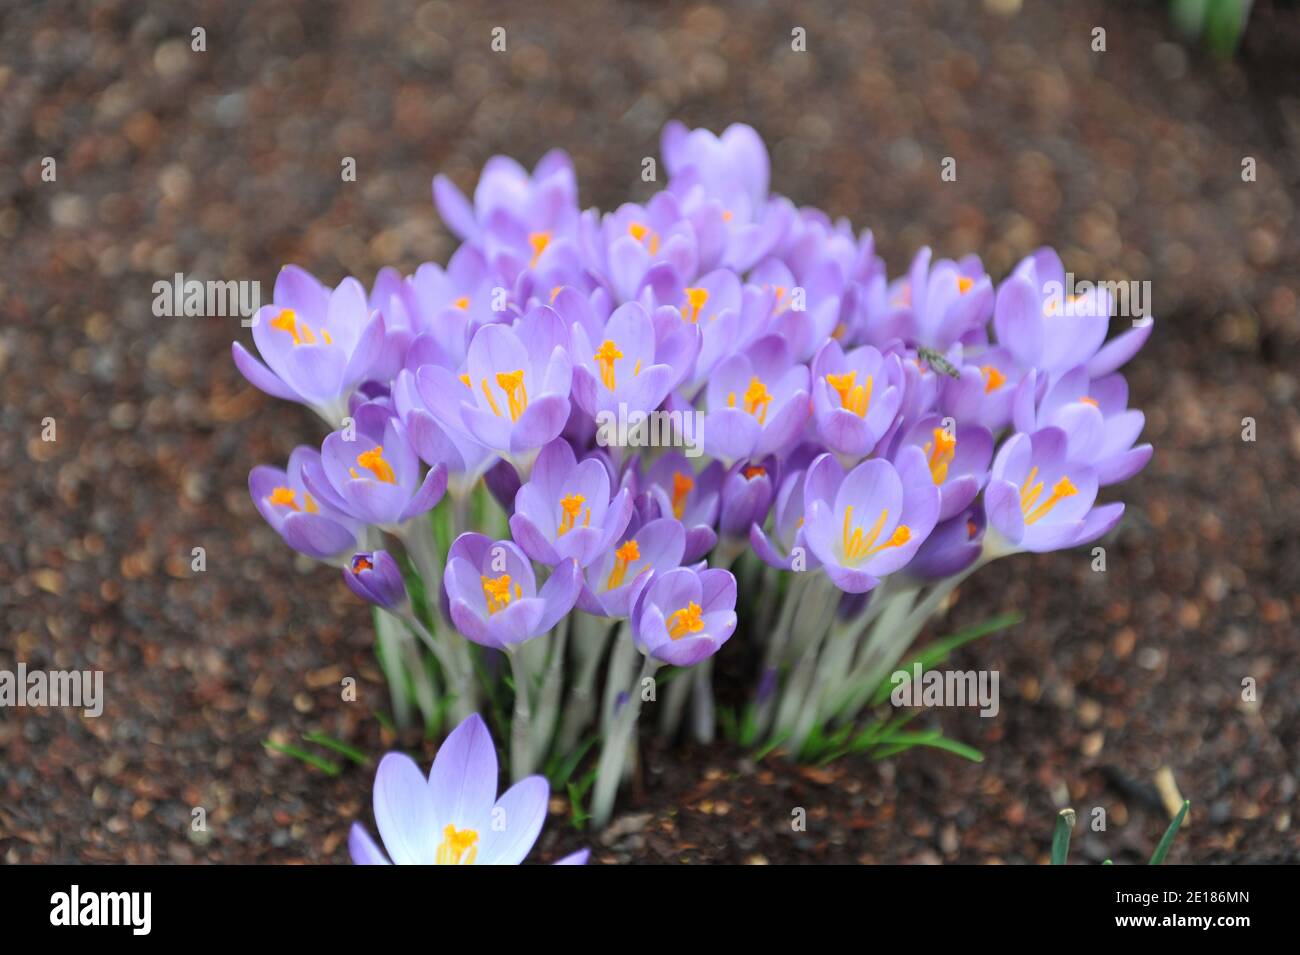 Violett-violetter Frühkrokus (Crocus tommasinianus) Whitewell Purple blüht im Februar in einem Garten Stockfoto